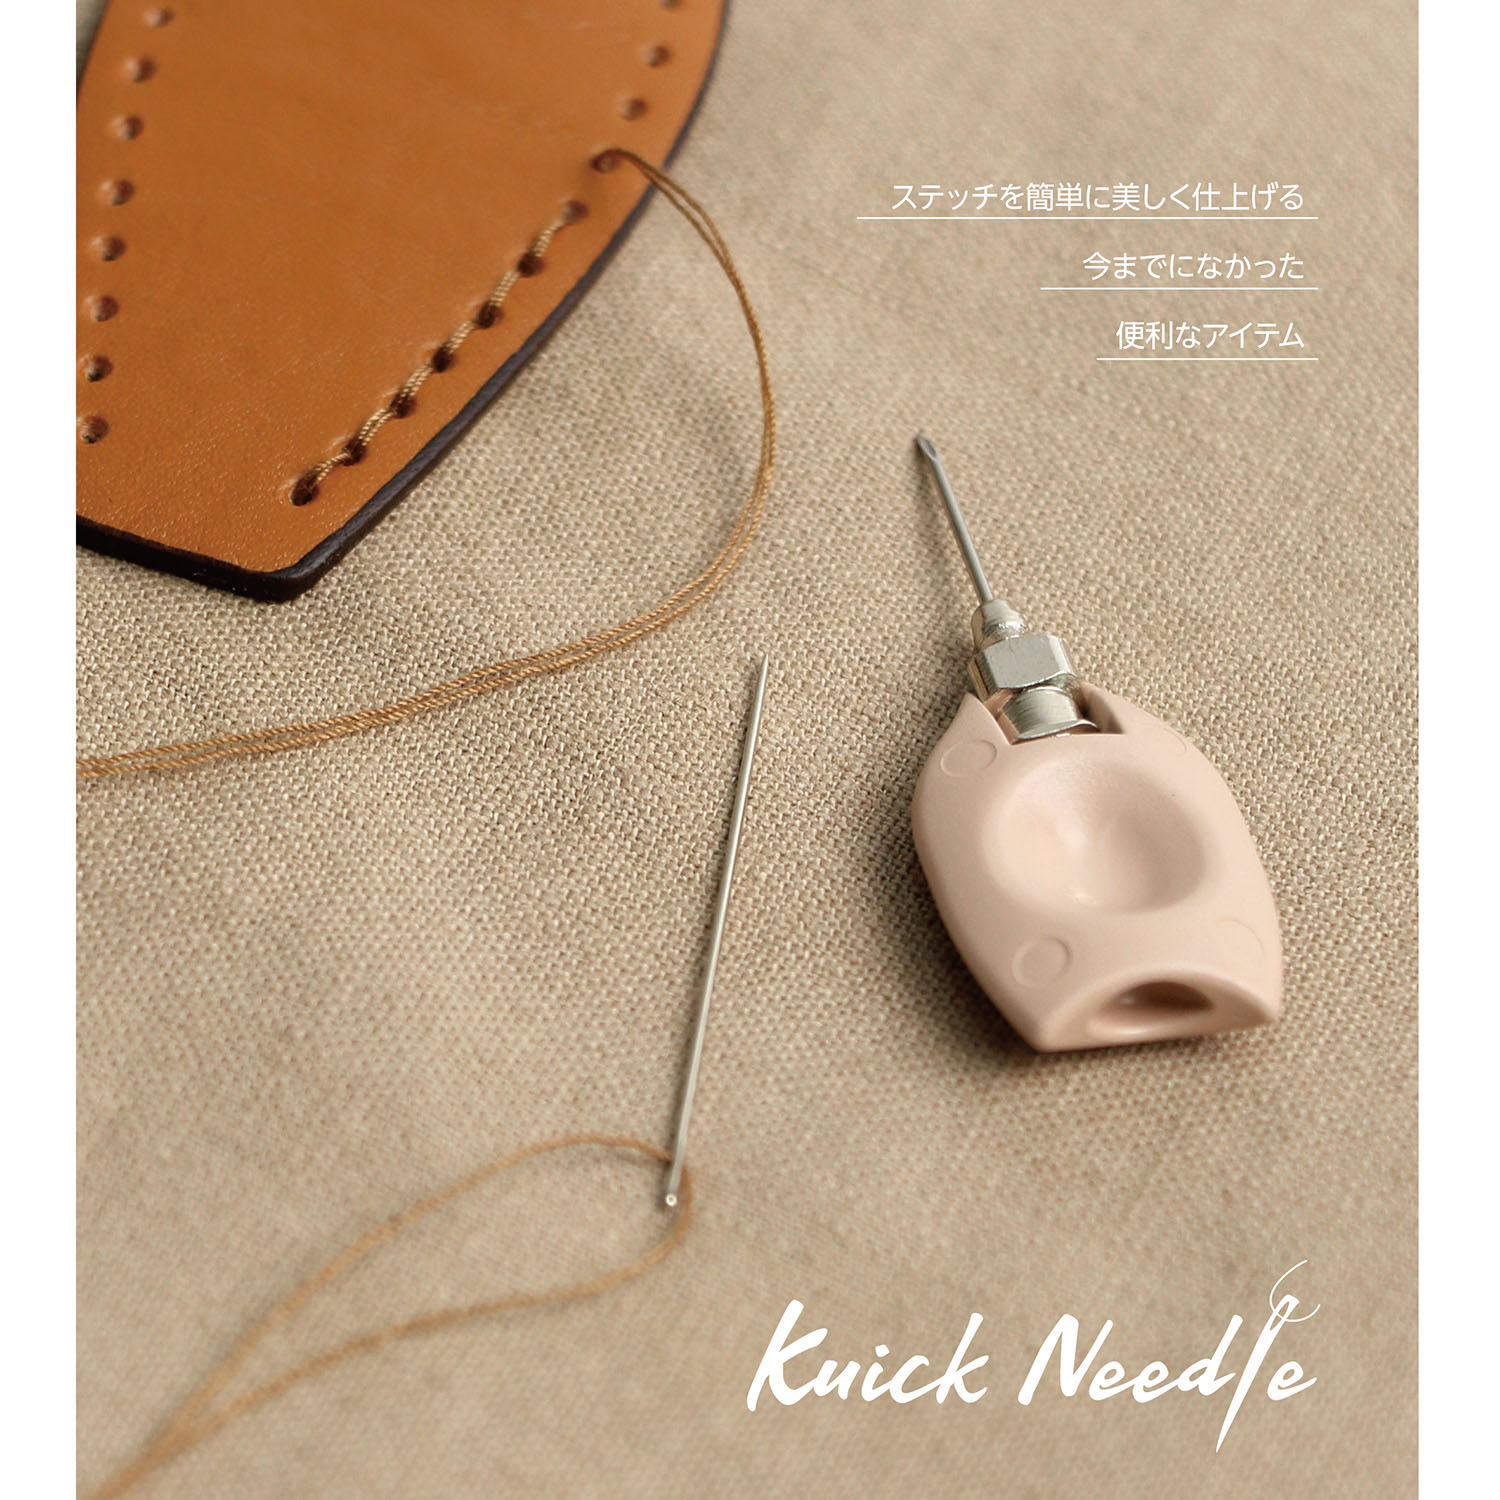 TK97011 Kuick Needle クイックニードル (個) 2